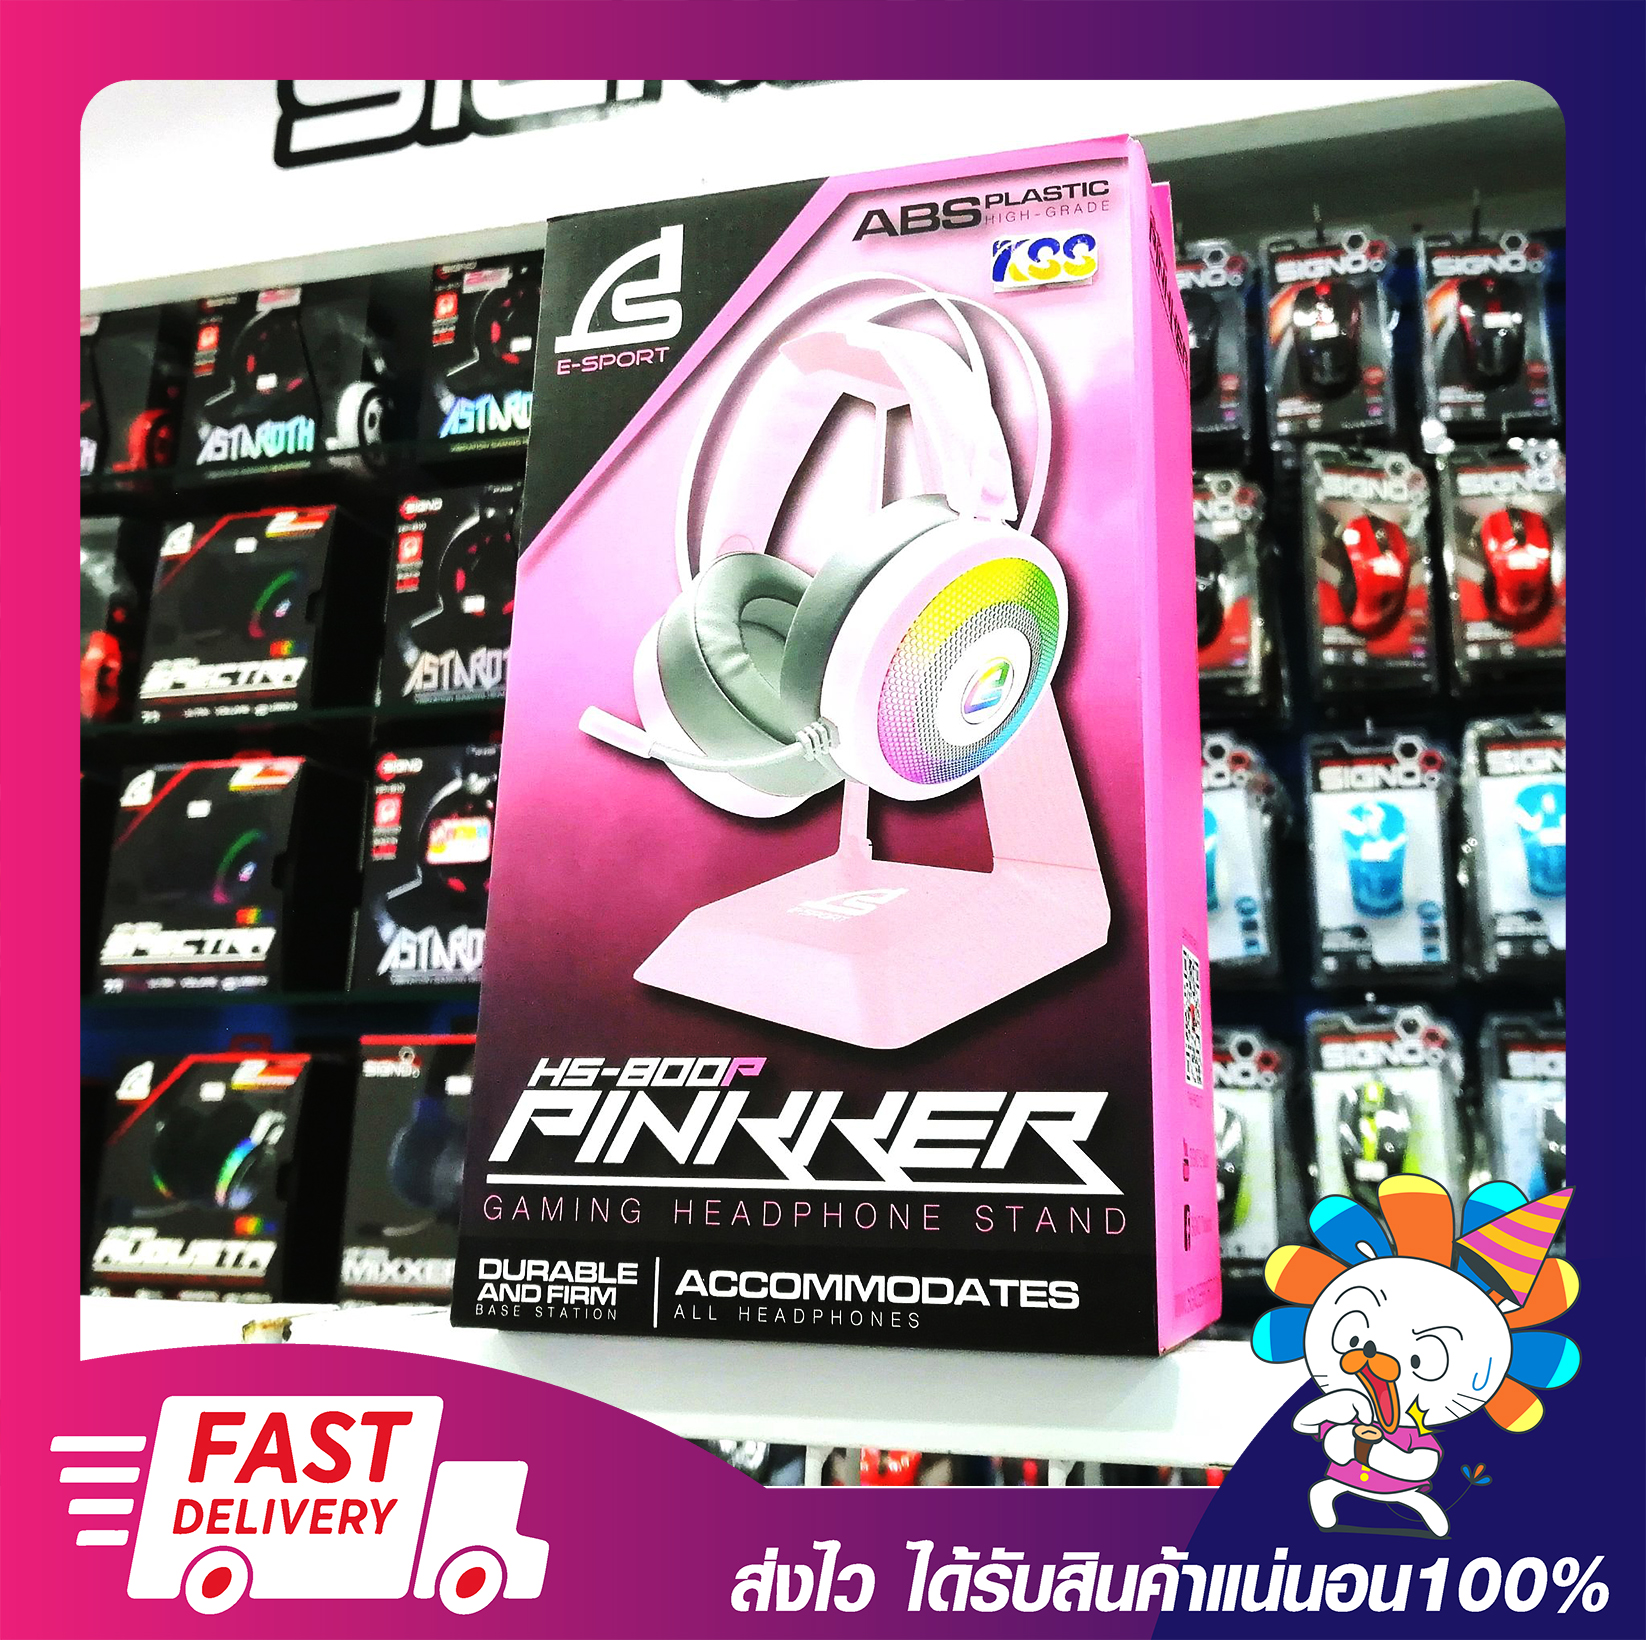 Signo E-Sport HS-800P Pinkker Gaming Headphone Stand แท่นสำหรับแขวนหูฟัง